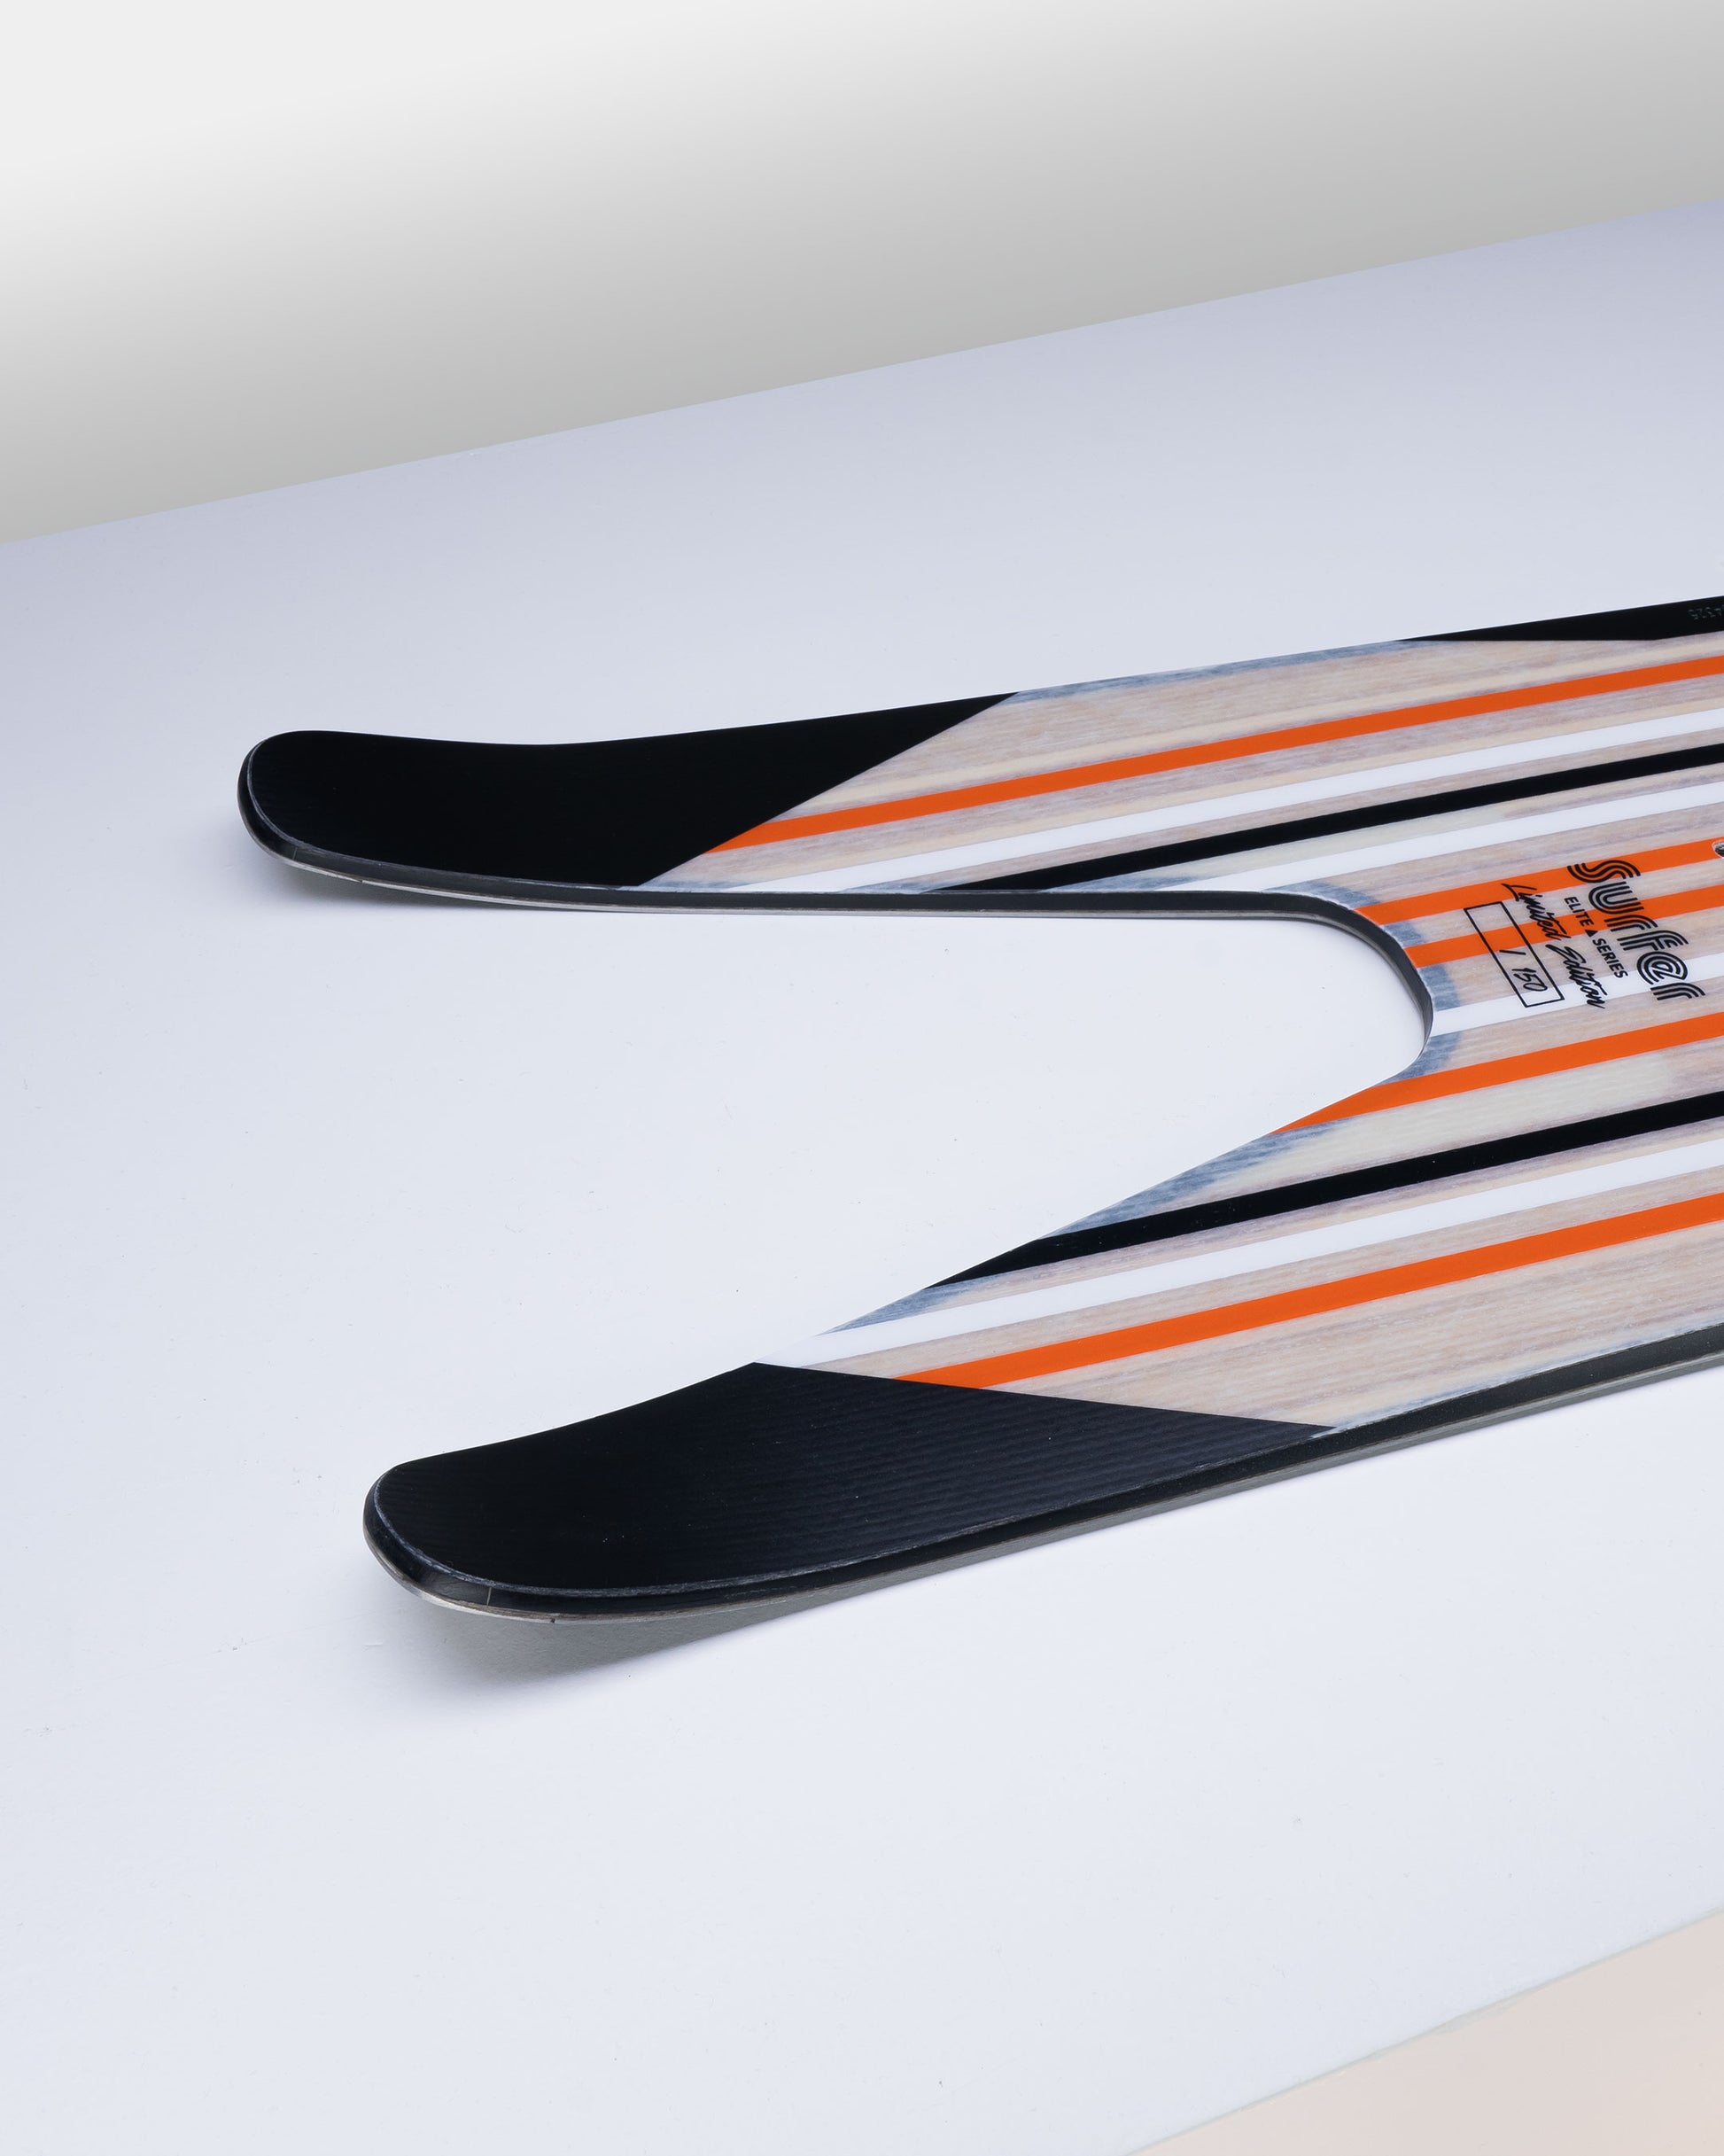 Bataleon Surfer Ltd Snowboard 2020 - 2021 product image by Bataleon Snowboards